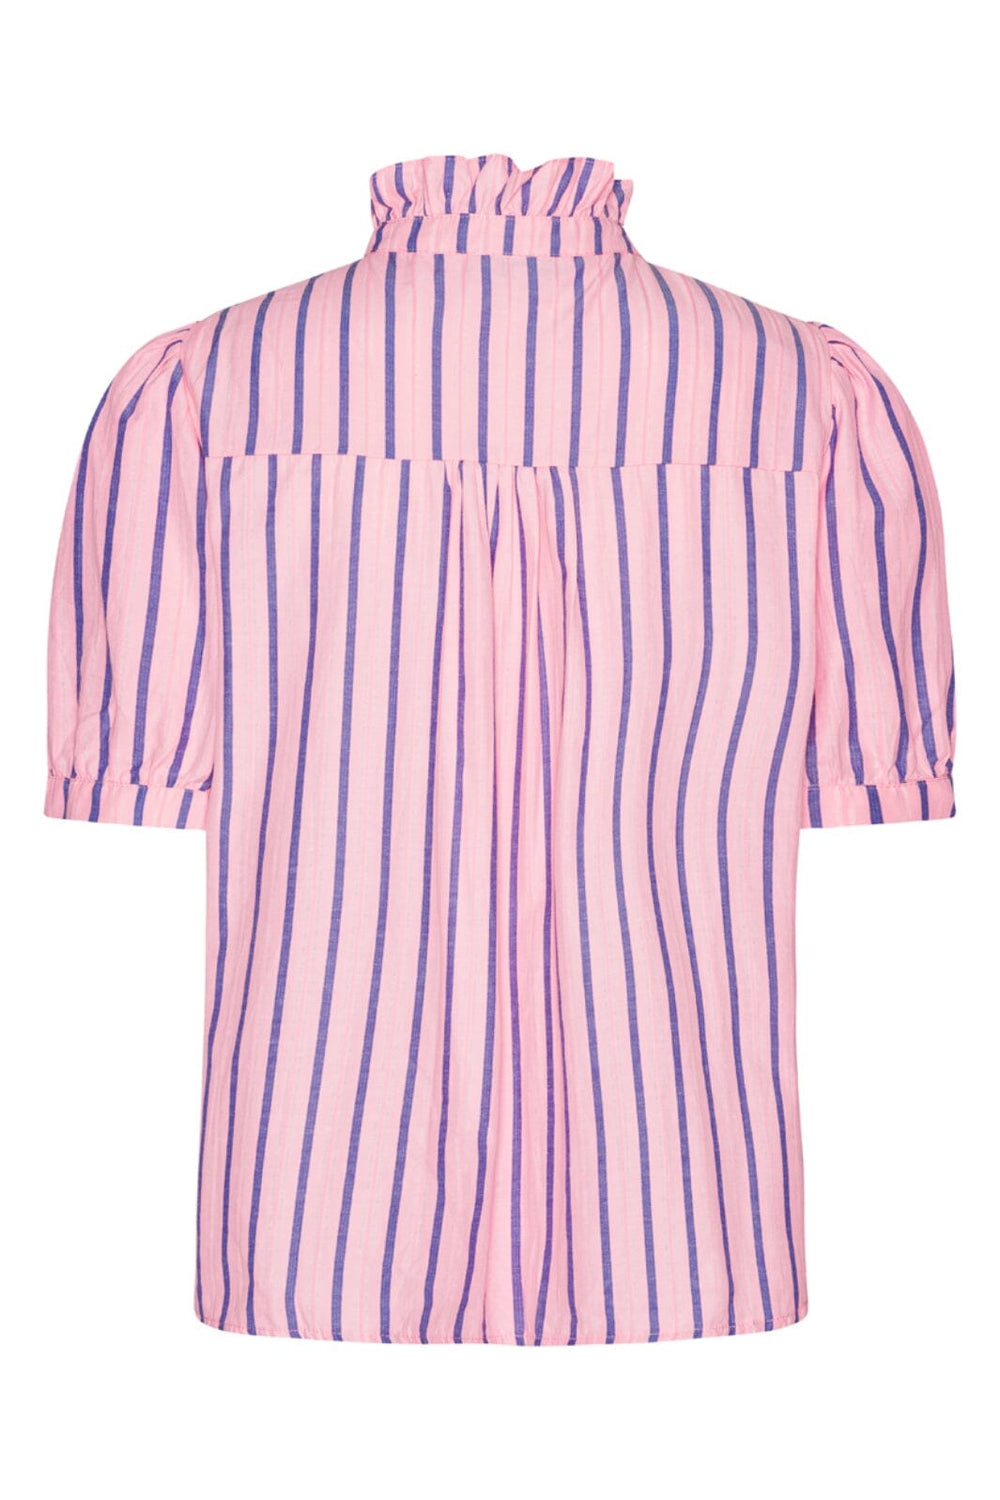 Continue - Arianna Ss Stripe - Pink Stripe Bluser 